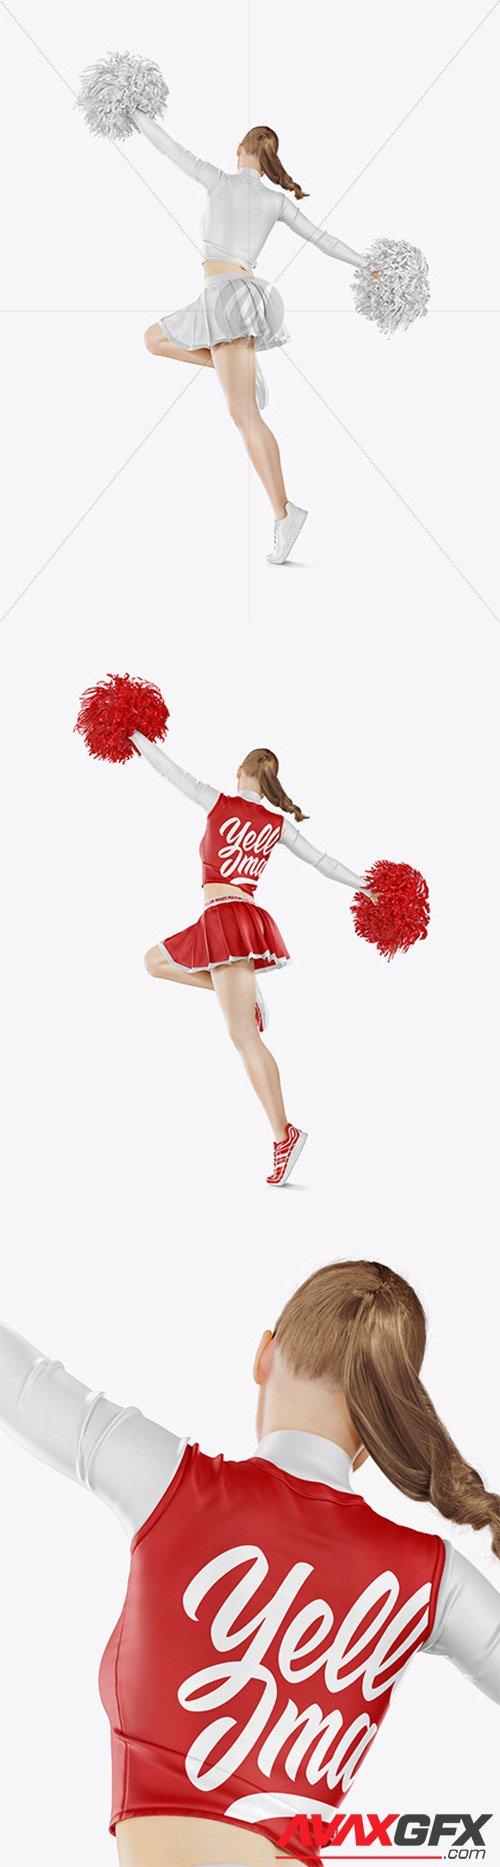 Jumping Cheerleader Girl Mockup 61802